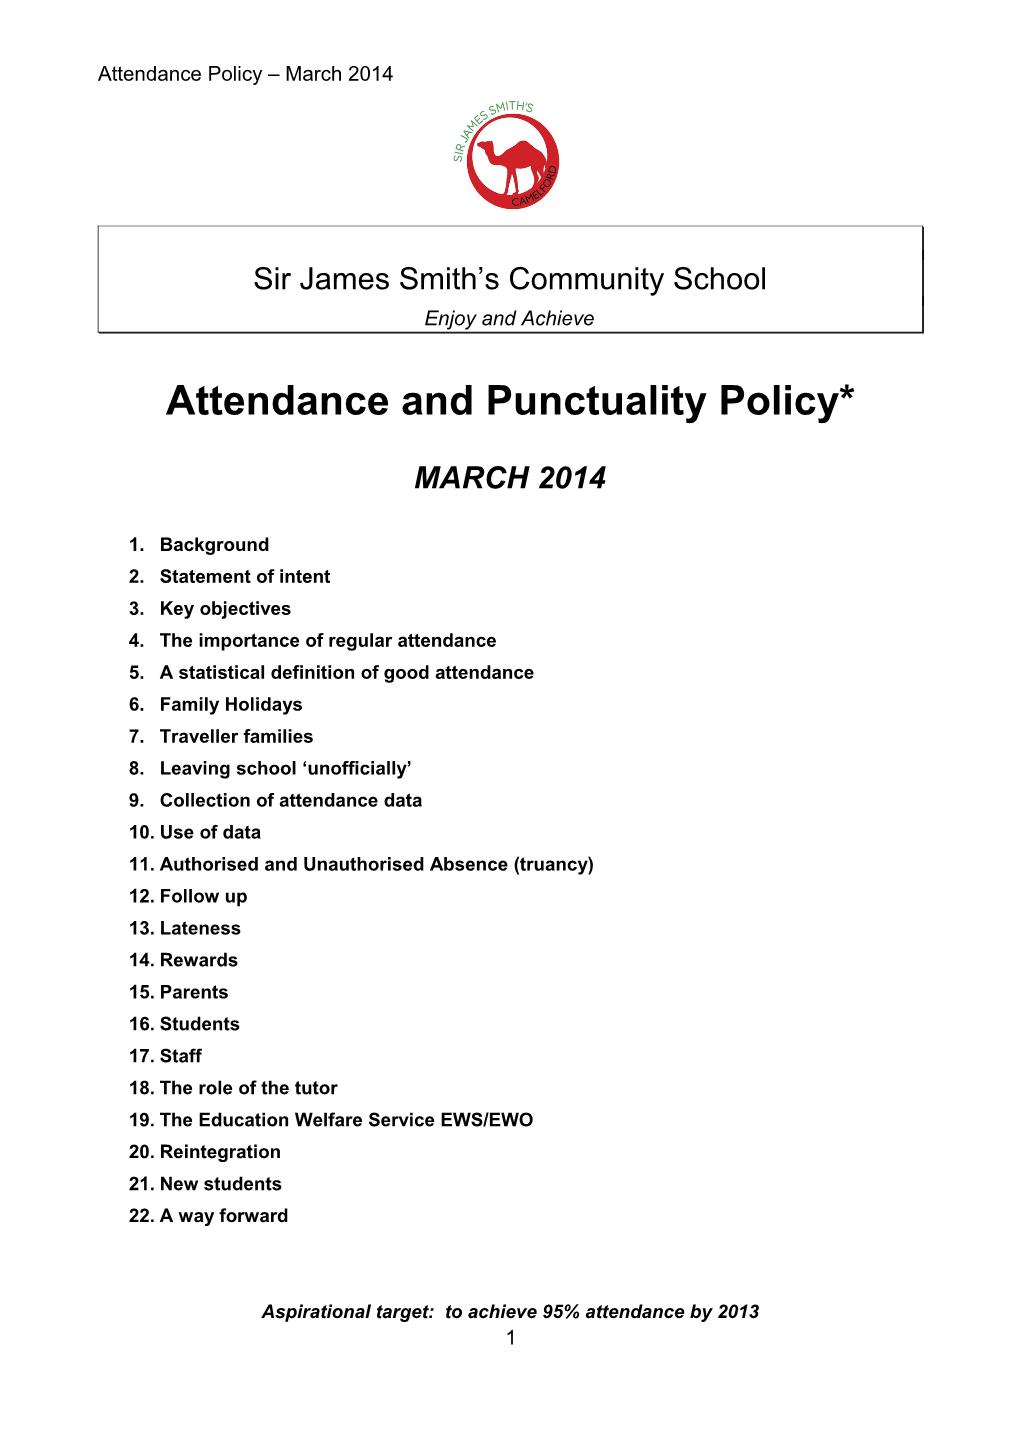 Sir James Smith S Community School s2